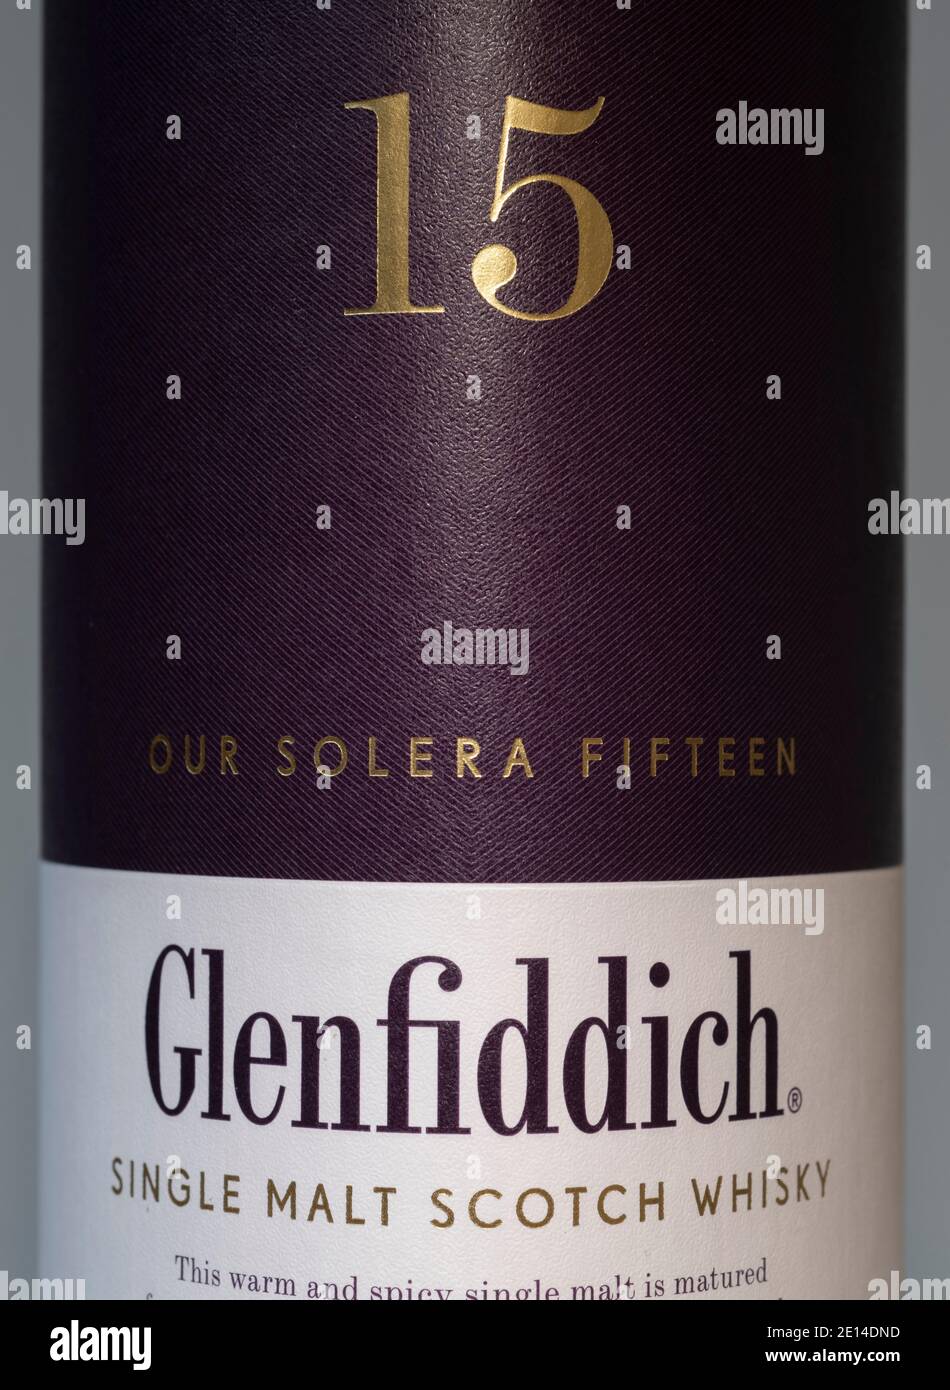 Glenfiddich 15 year old Solera single malt Scotch Whisky outer carton box closeup Stock Photo